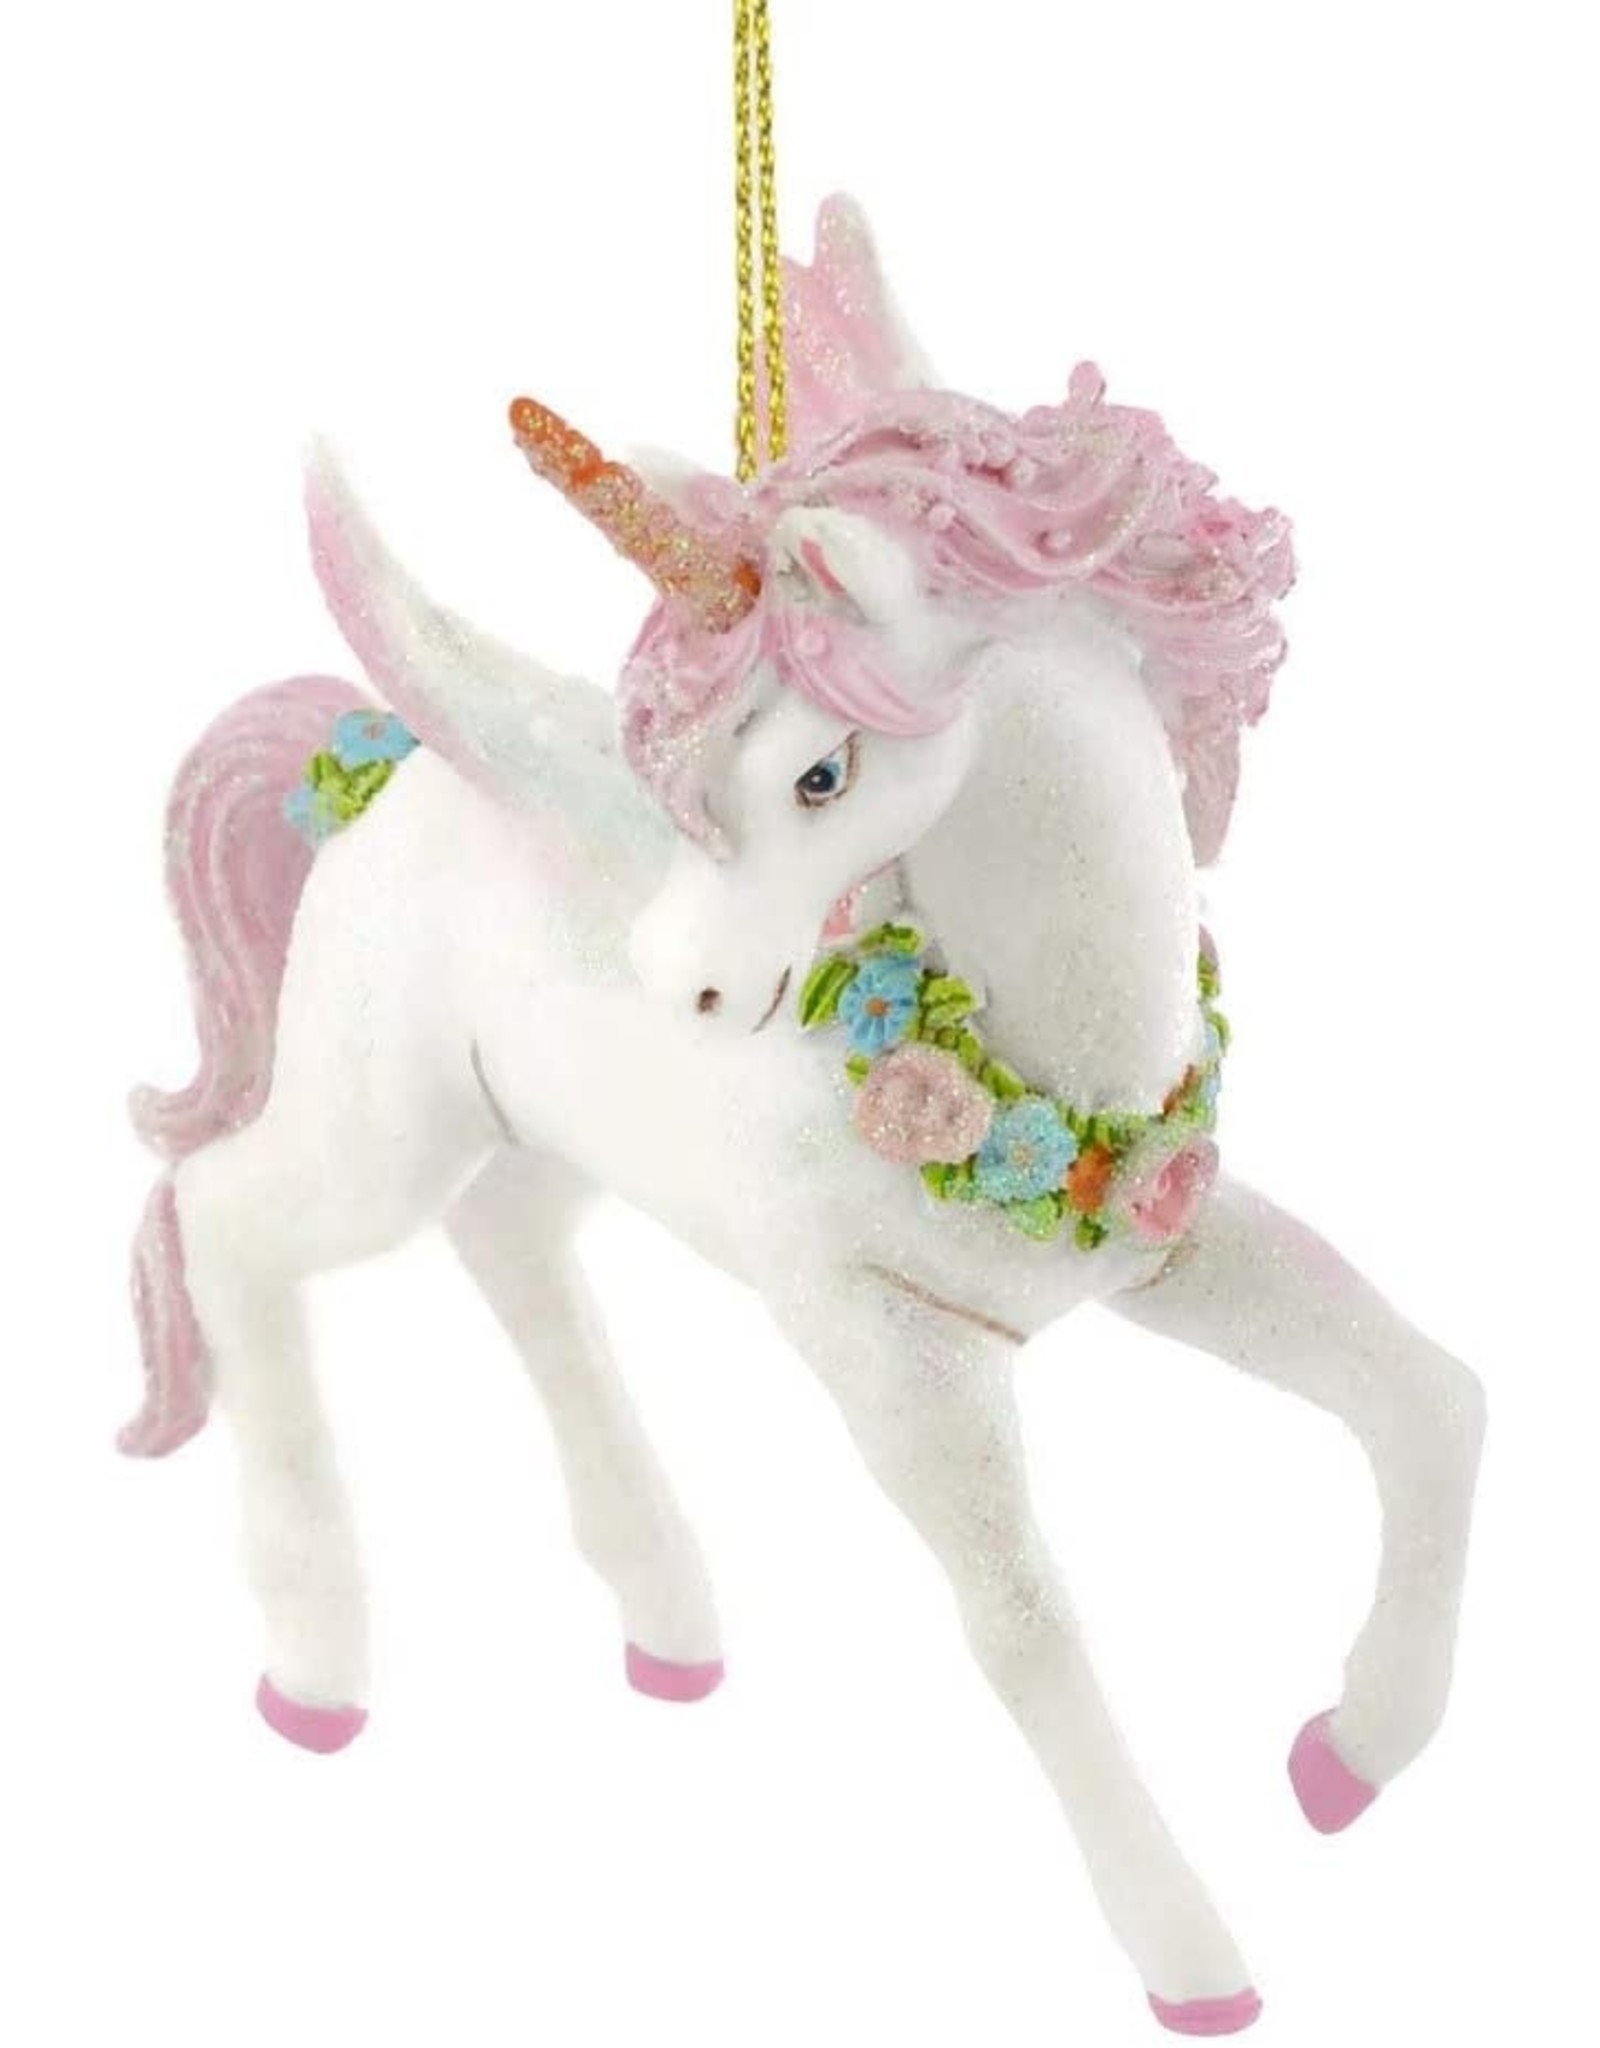 Kurt Adler Glittered Unicorn Fantasy Horse Ornament